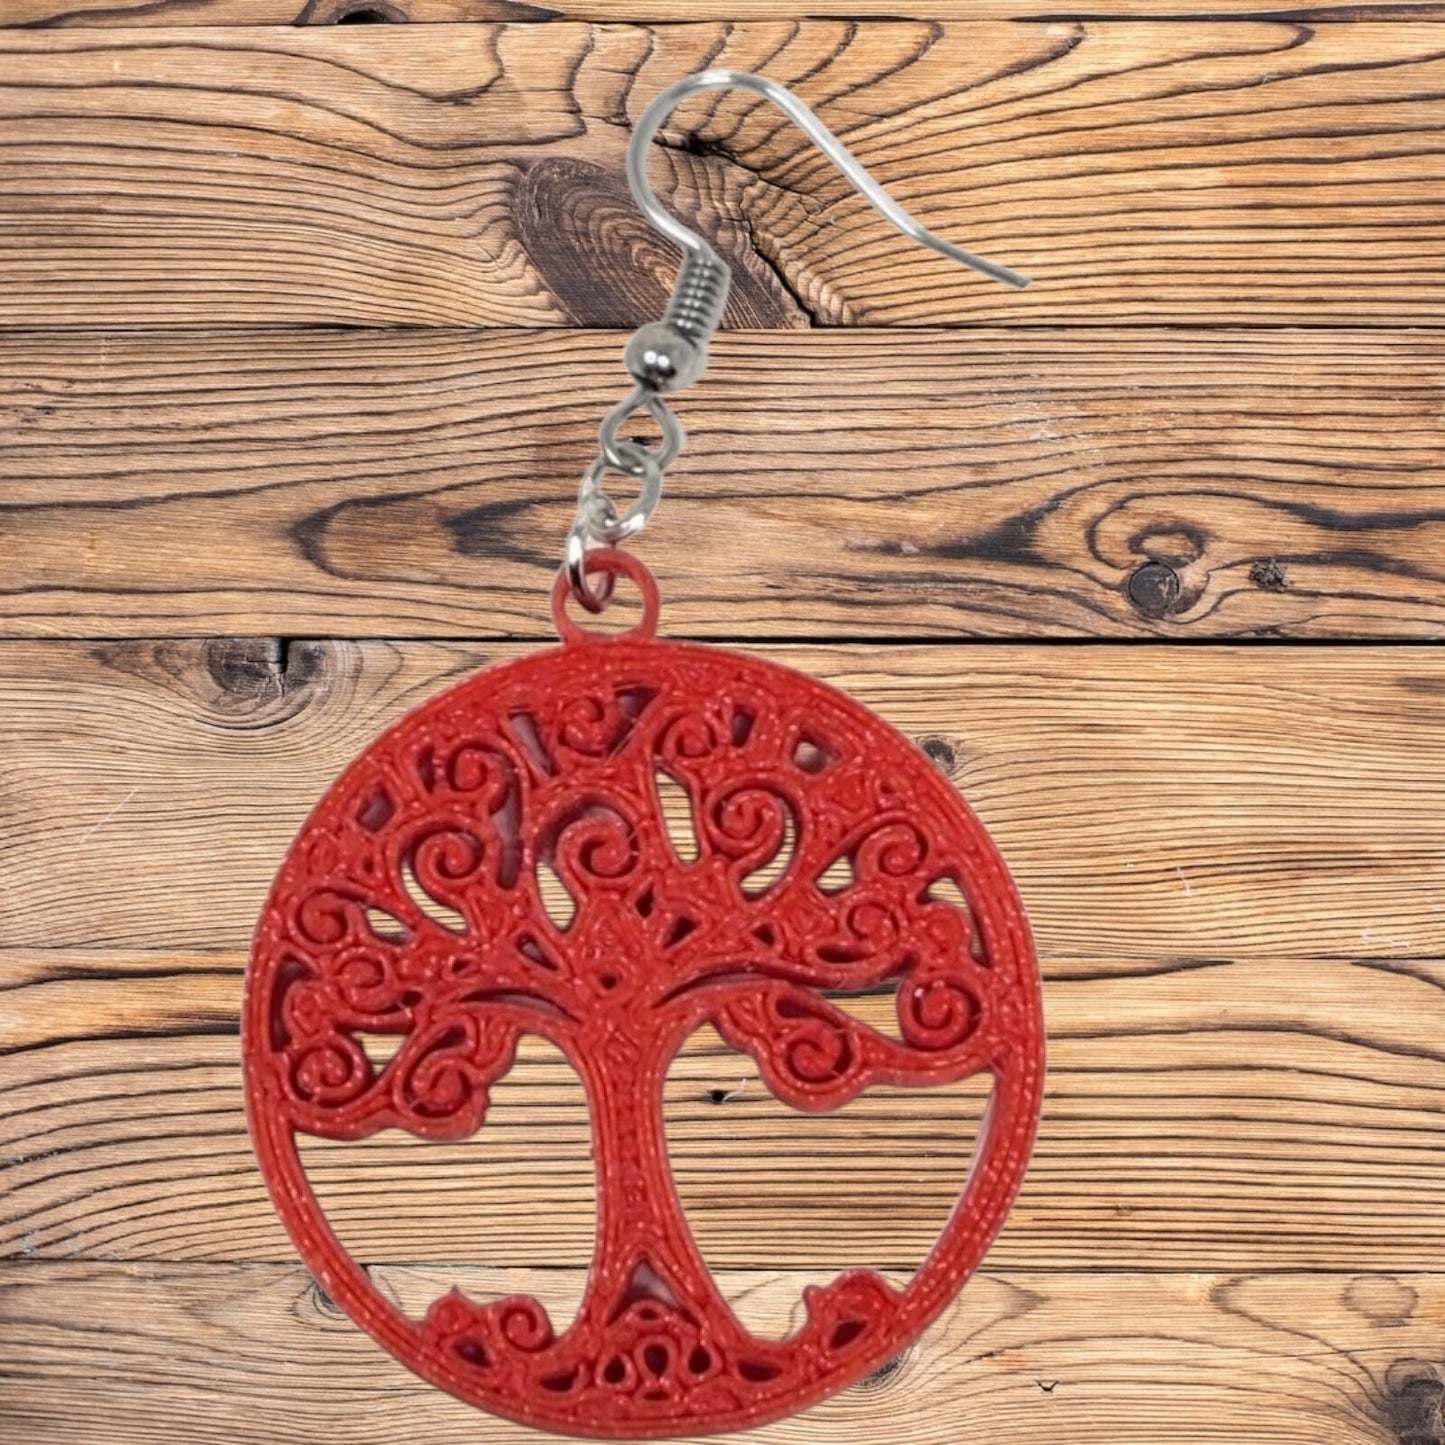 Handmade Tree of Life Drop Hook Earrings - 3D Printed Nature-Inspired Jewelry